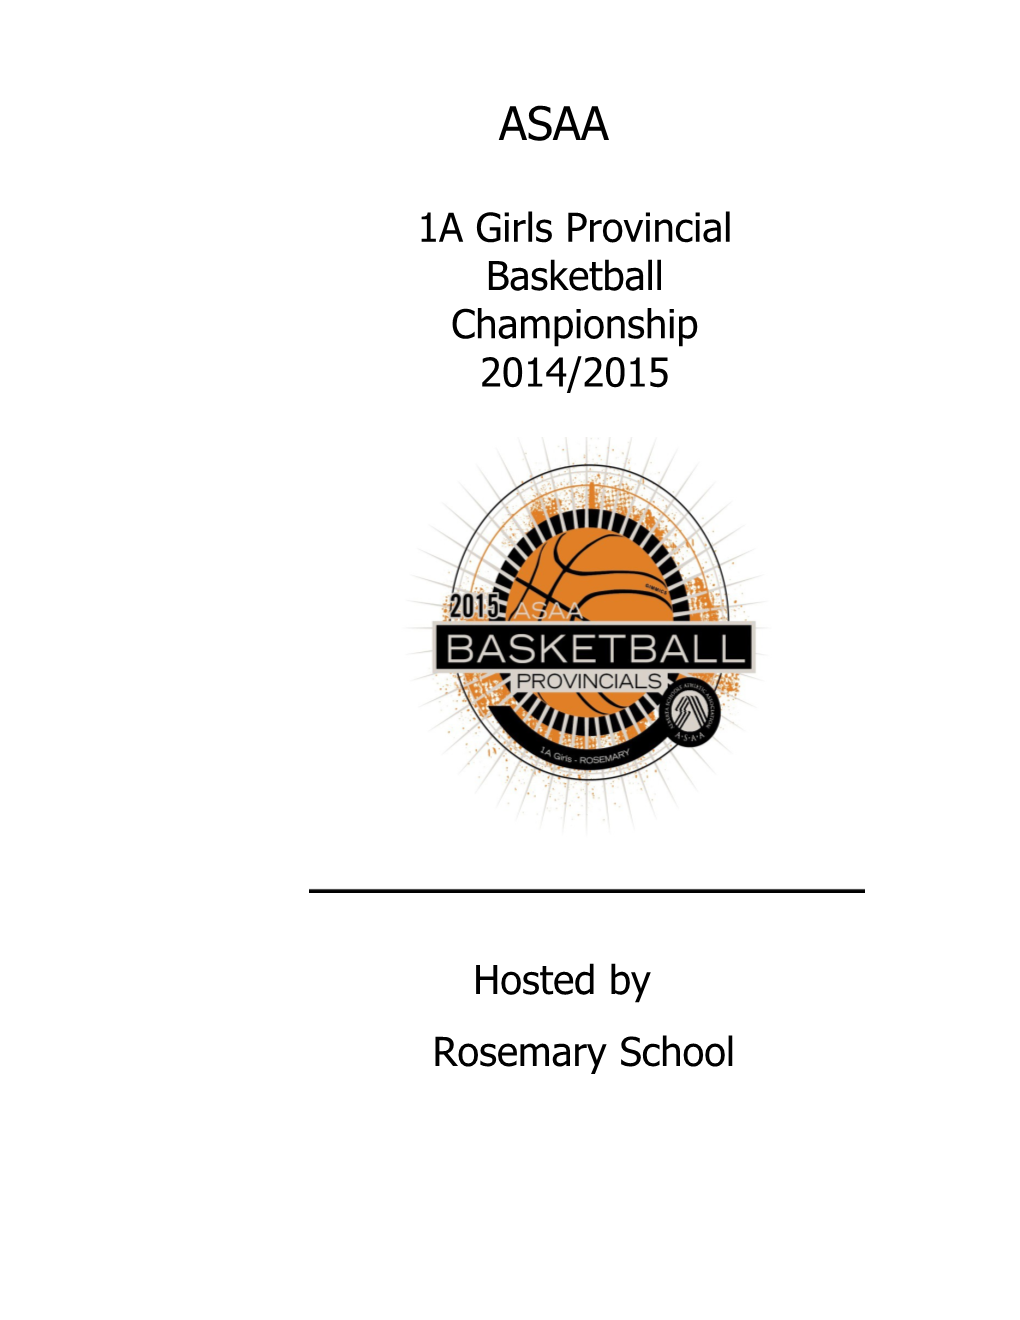 1A Girls Provincial Basketball Championship 2014/2015